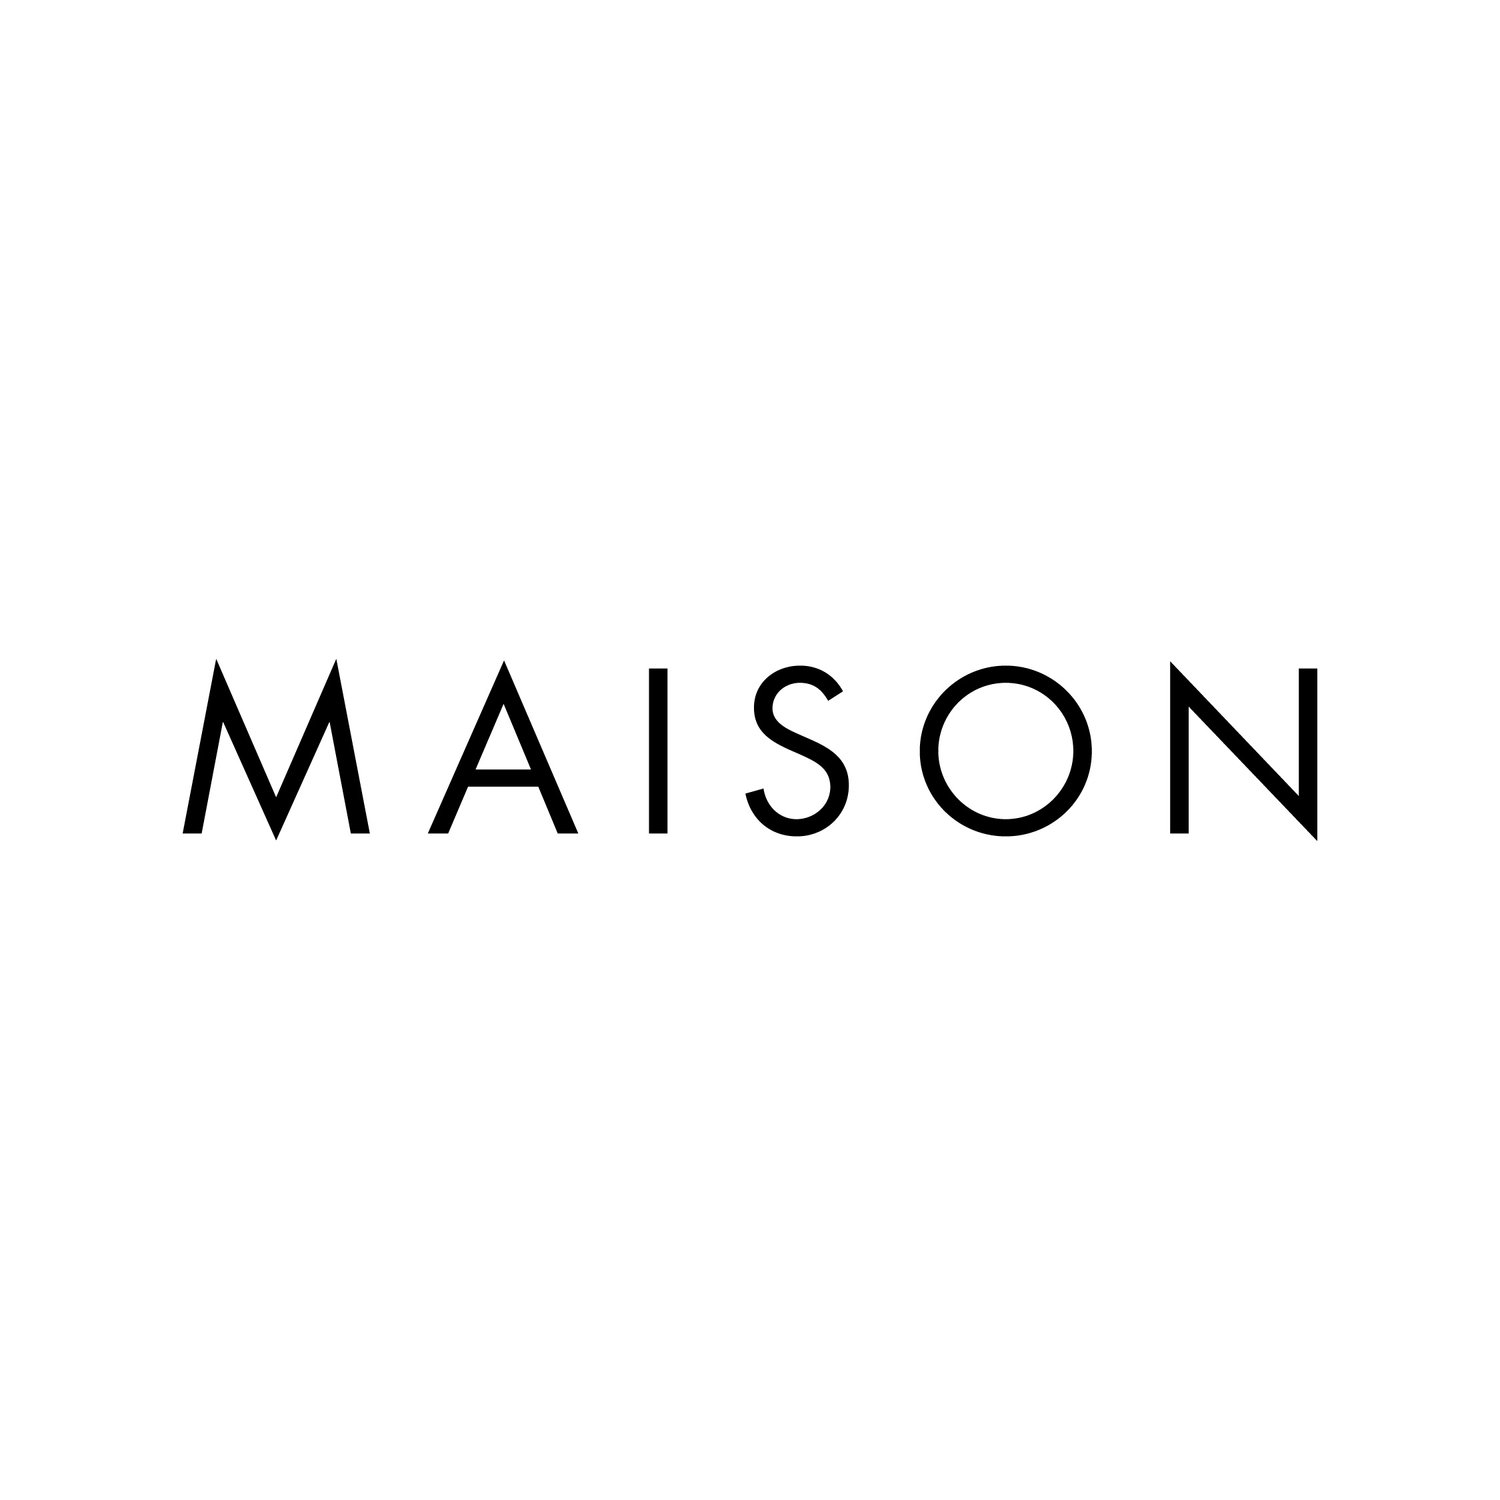 Maison Estate - Wine Estate & Restaurant in Franschhoek